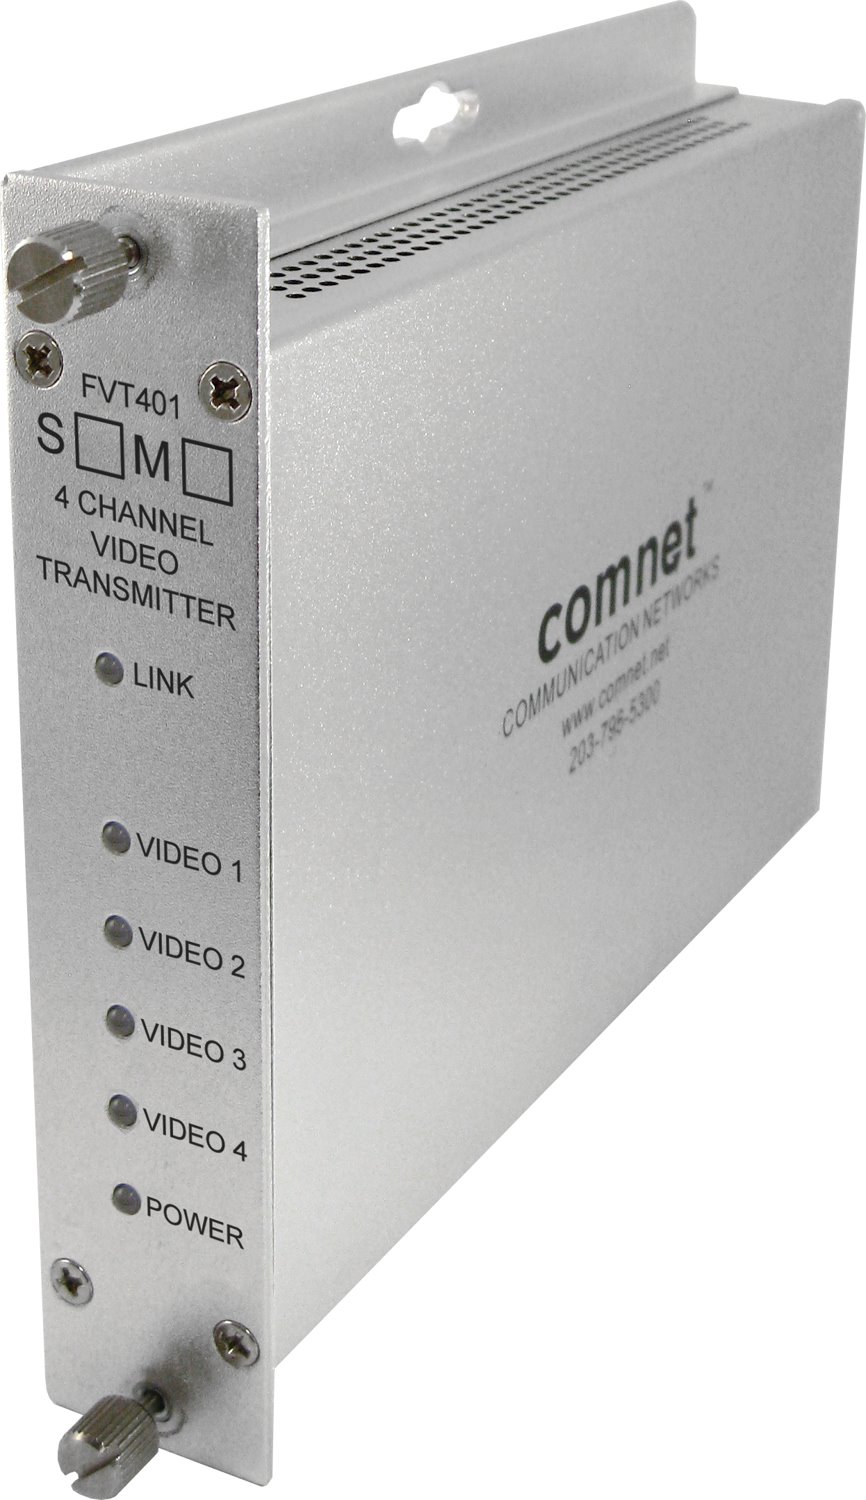 Comnet 4CH Digital Encoded Video